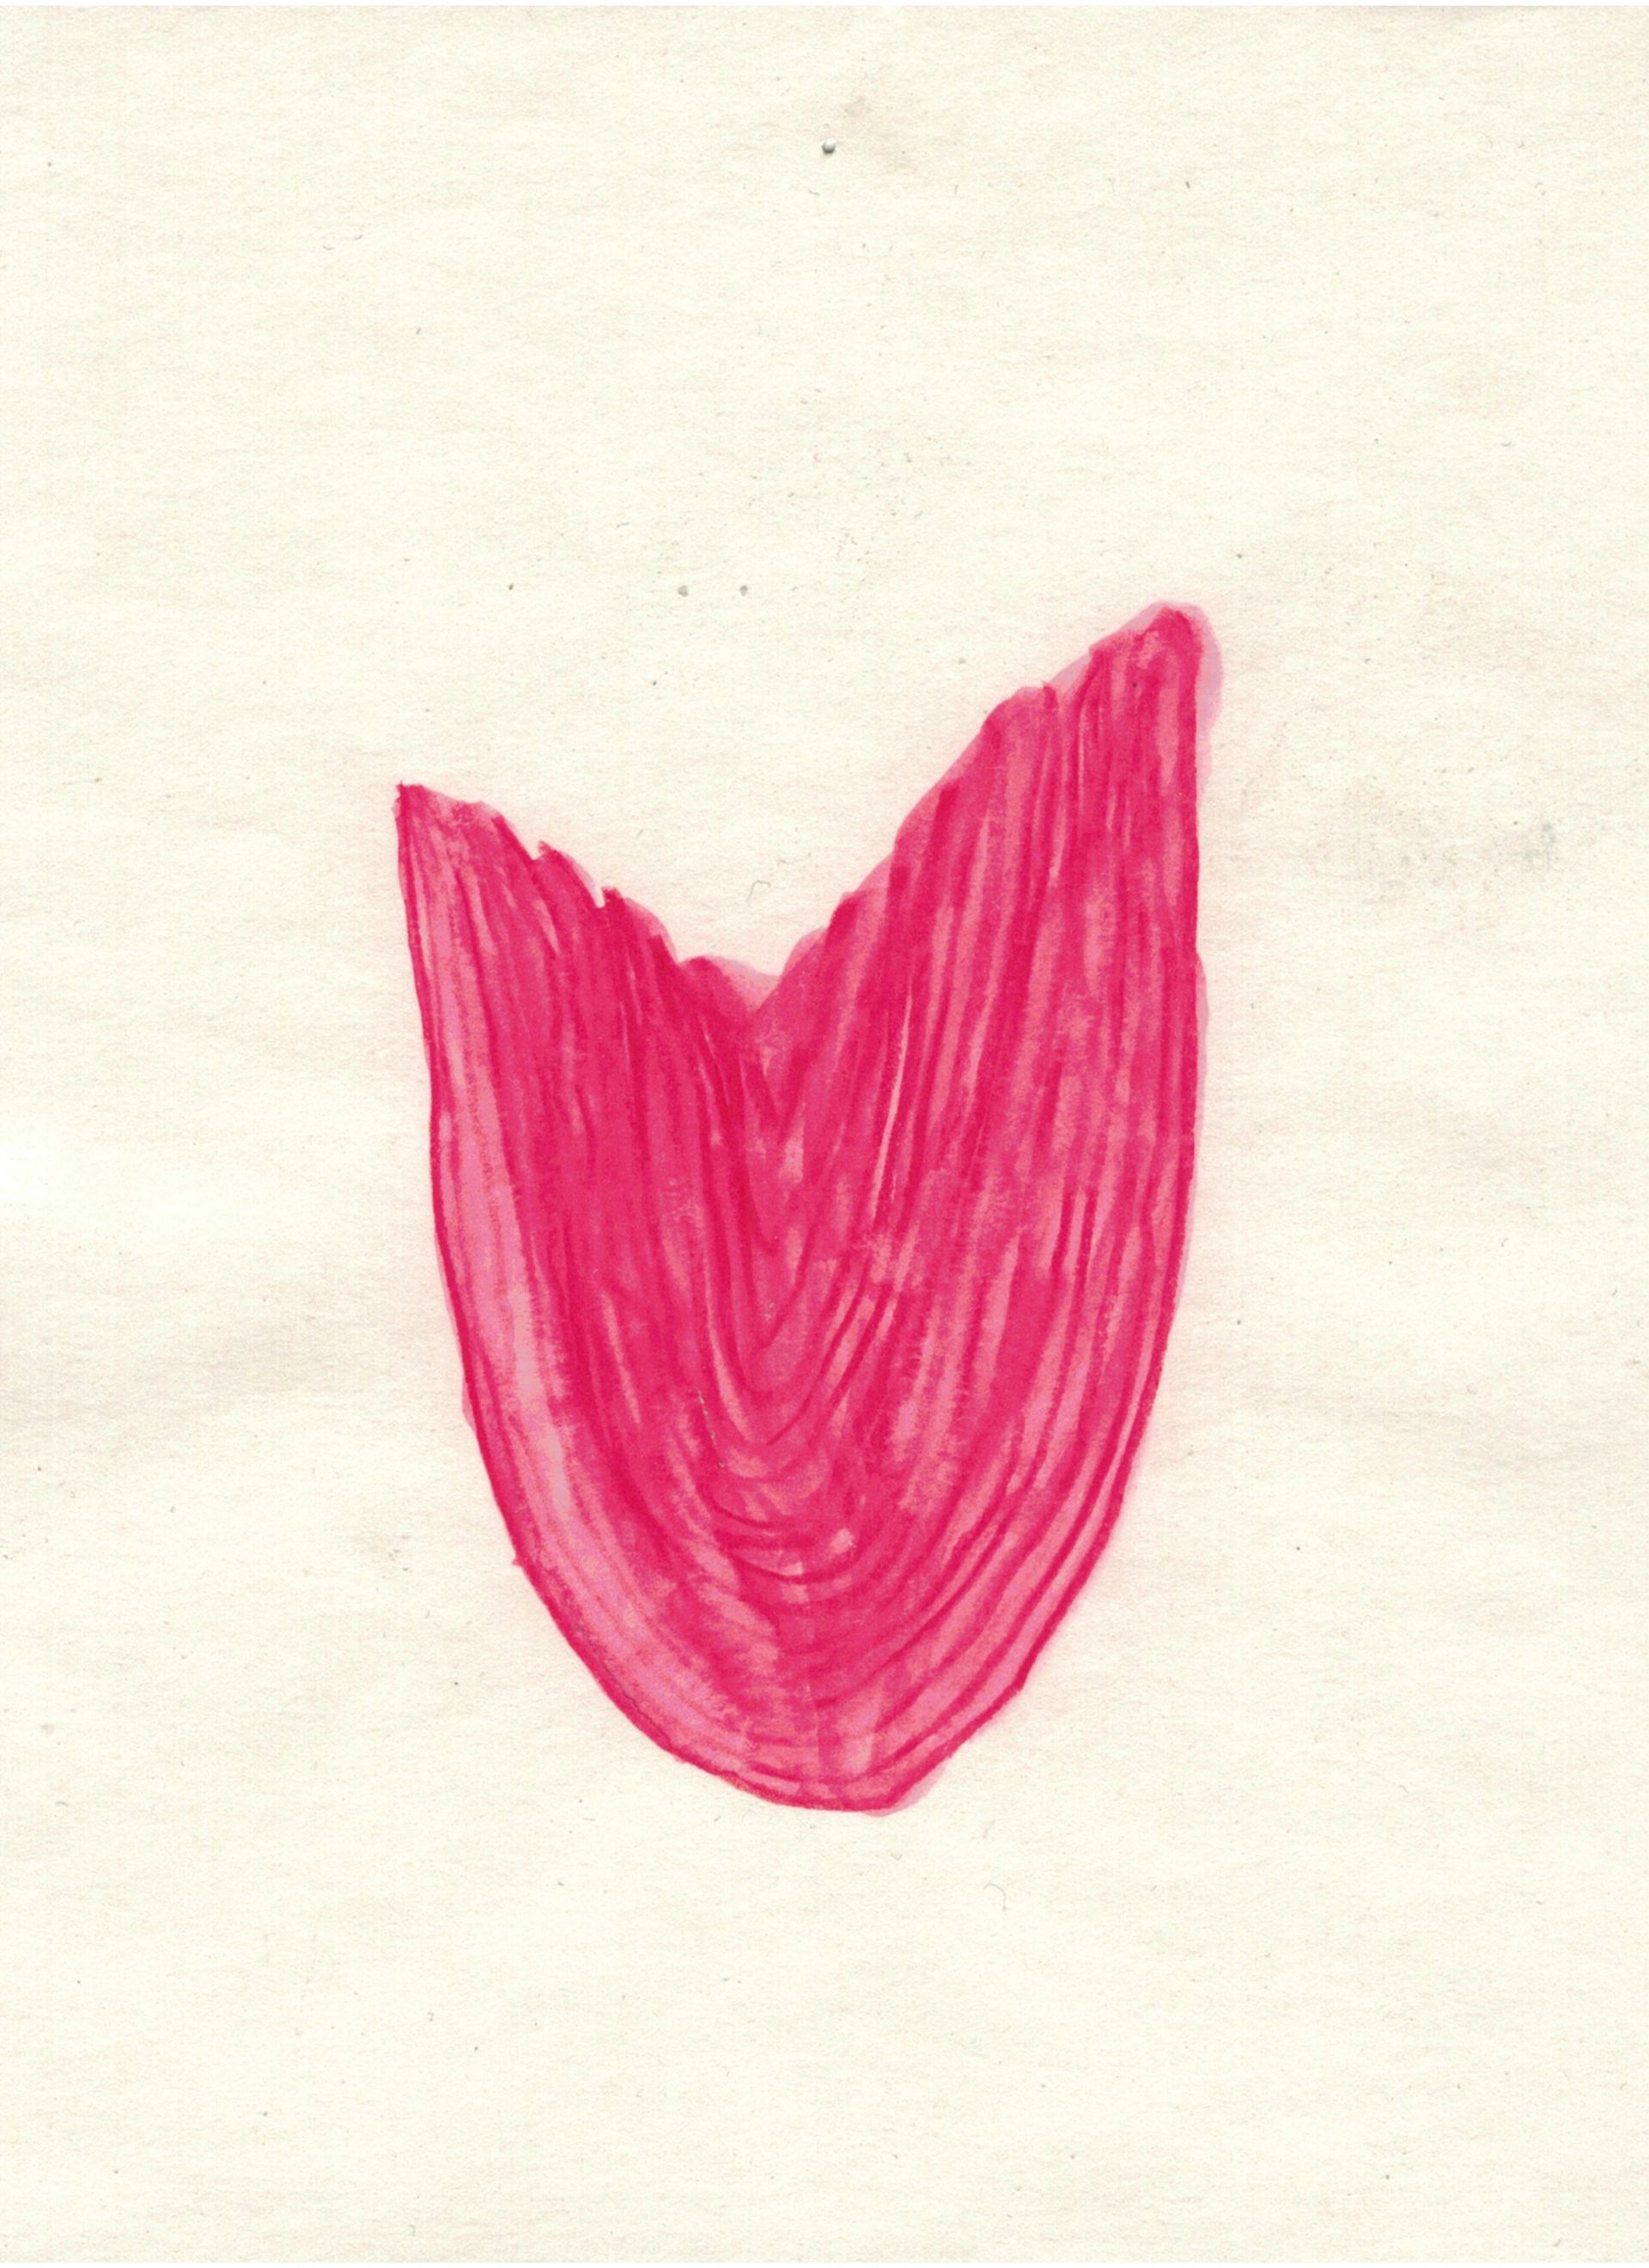 Malte Zenses, Die Zunge vor dem Kaffee, 2021, watercolor pencil on paper, 14,8 × 21 cm